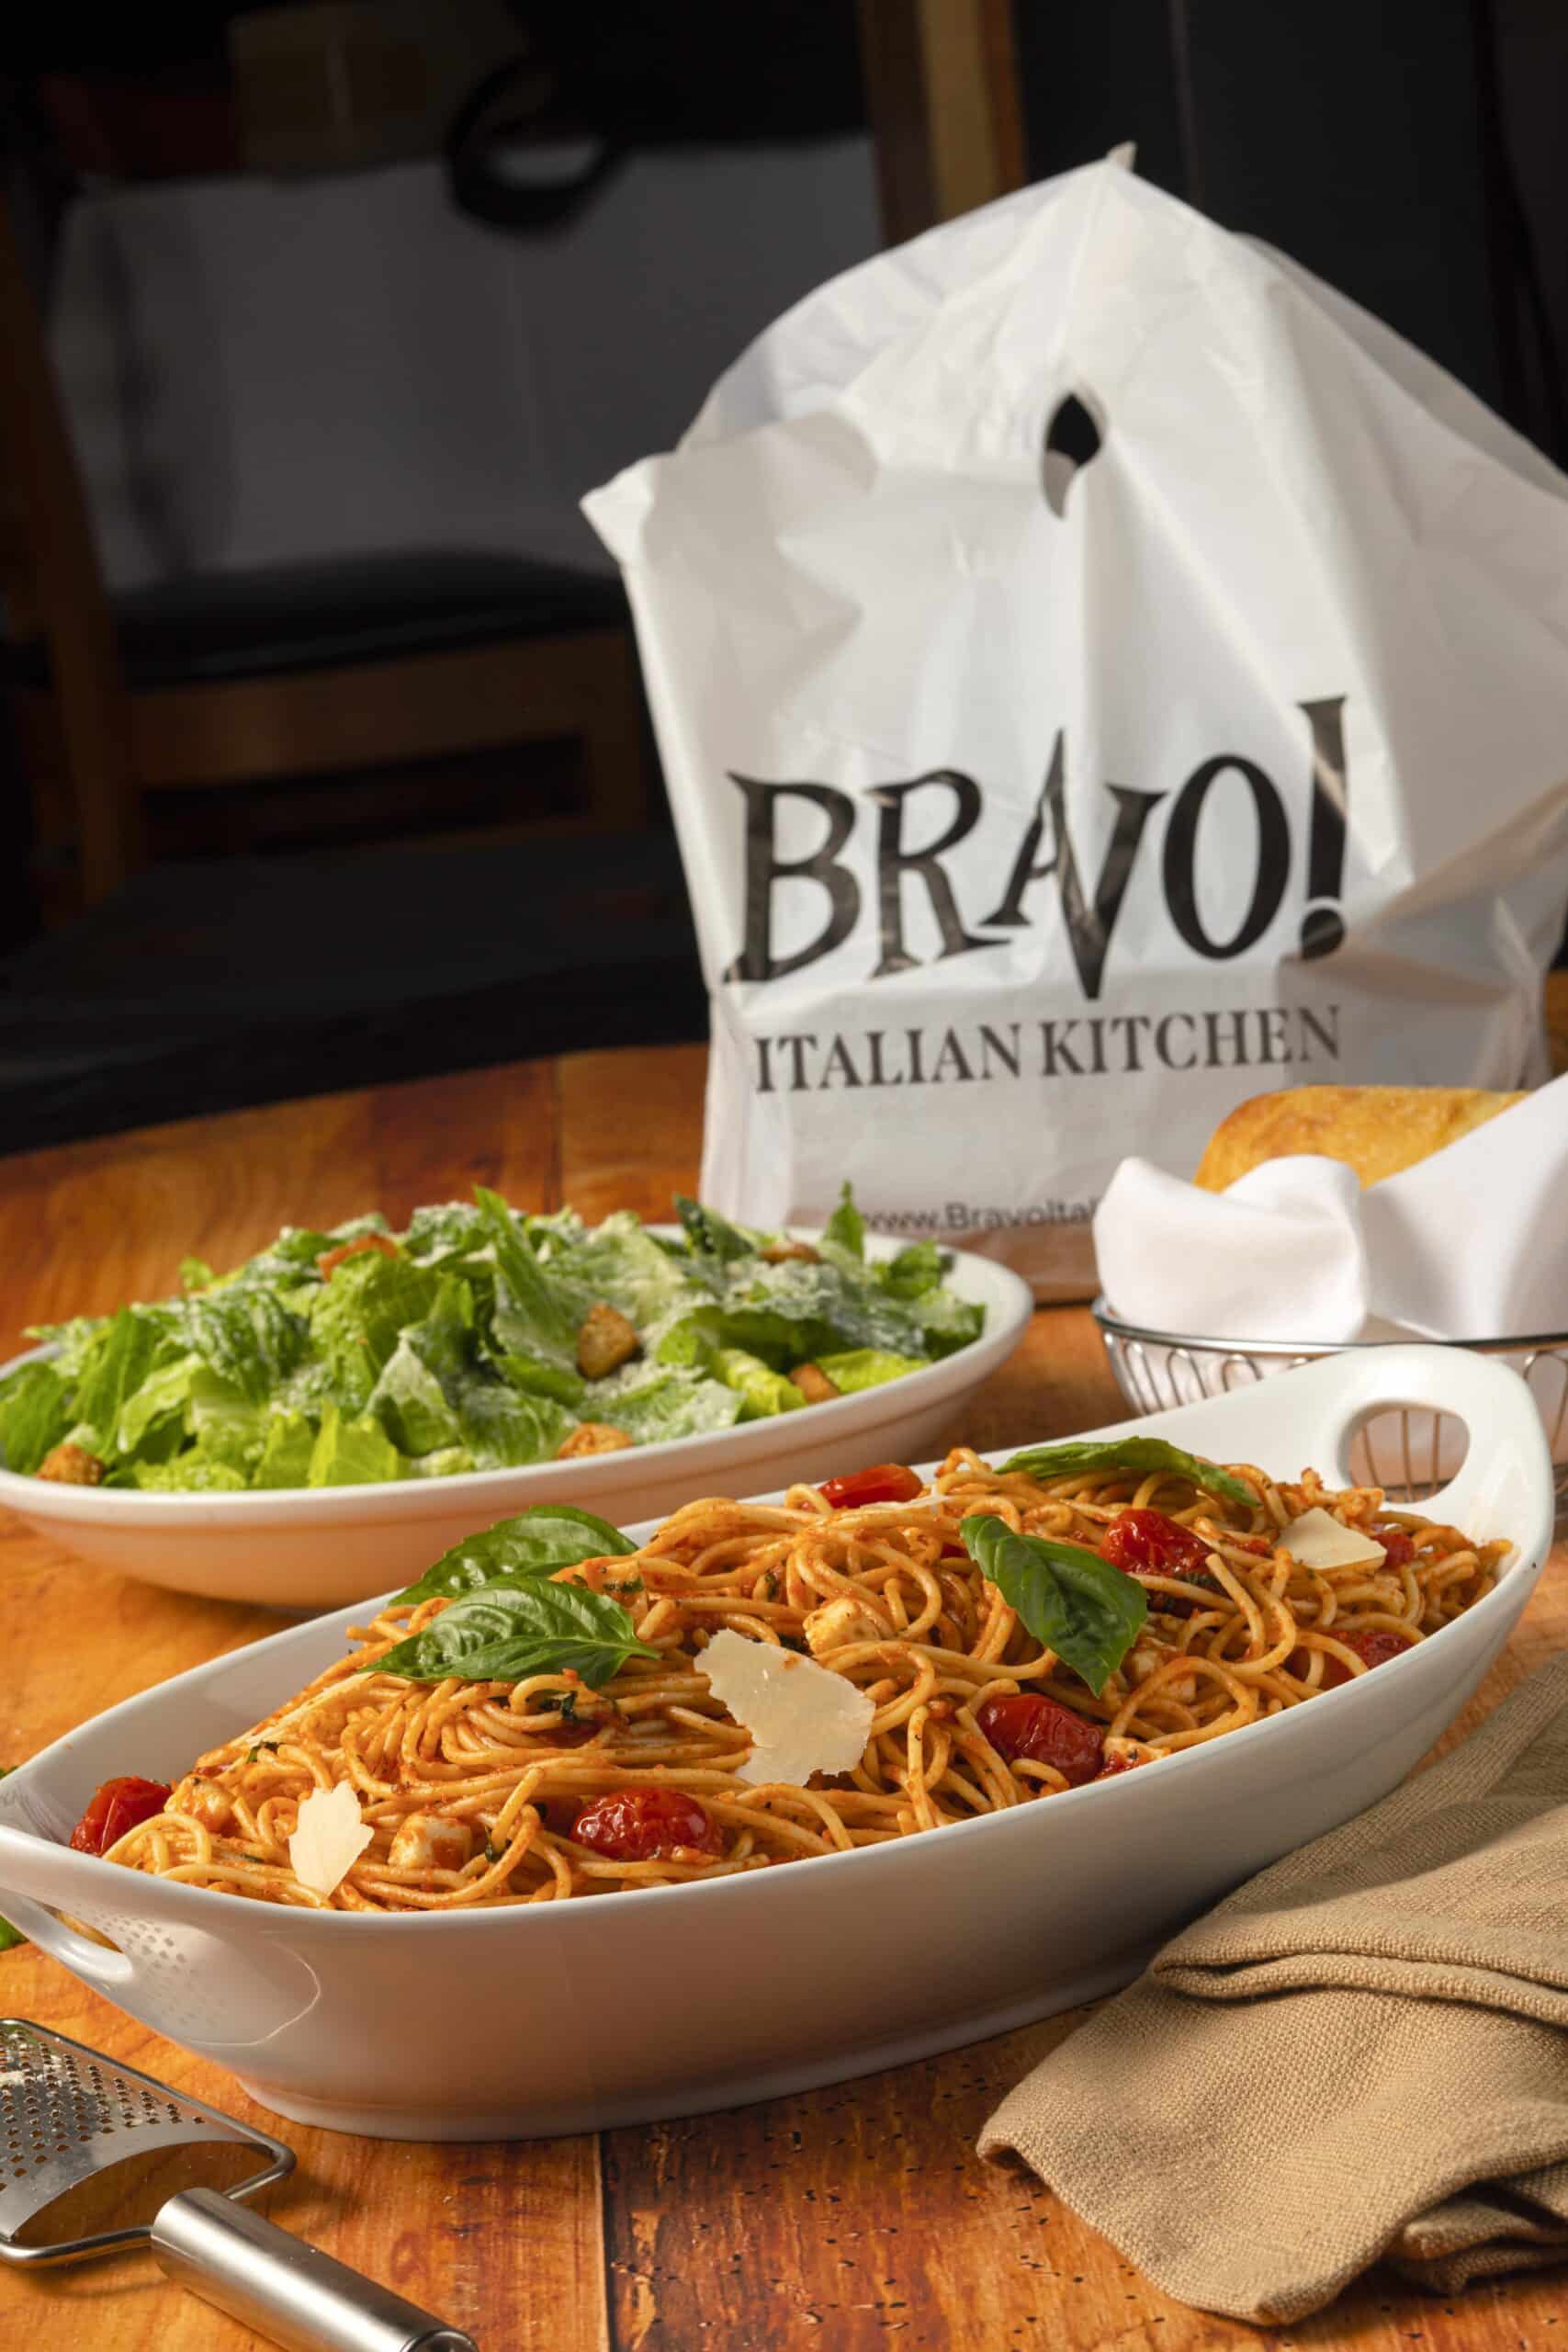 A photo of Bravo's Spaghetti Pomodoro with a take out bag